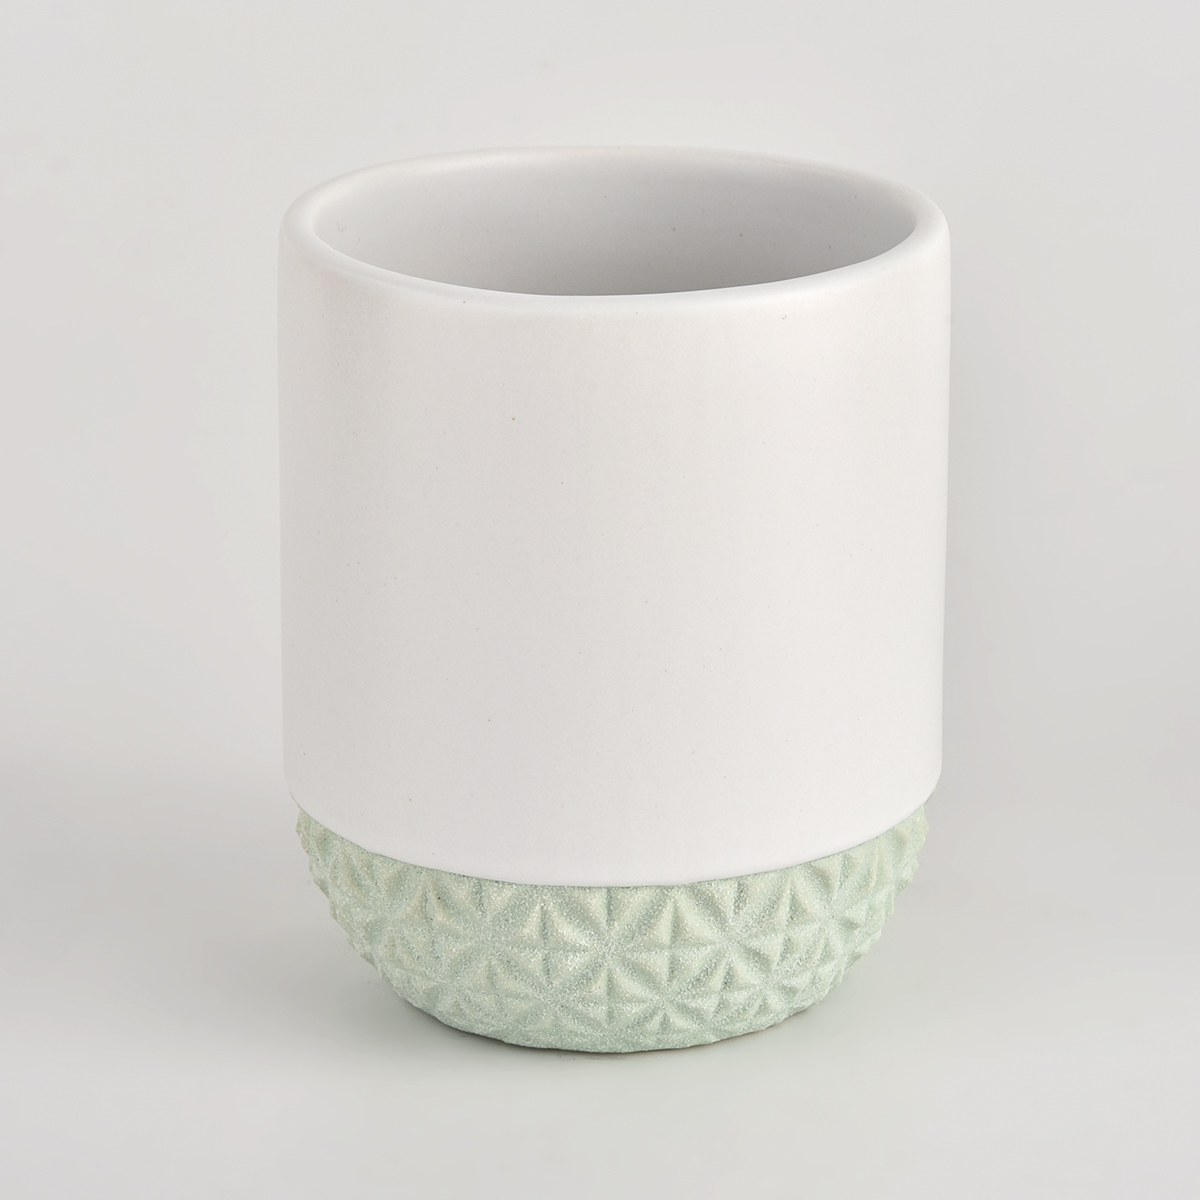 Recipiente de cerámica blanca mate con frascos decorativos de vela decorativa de fondo verde